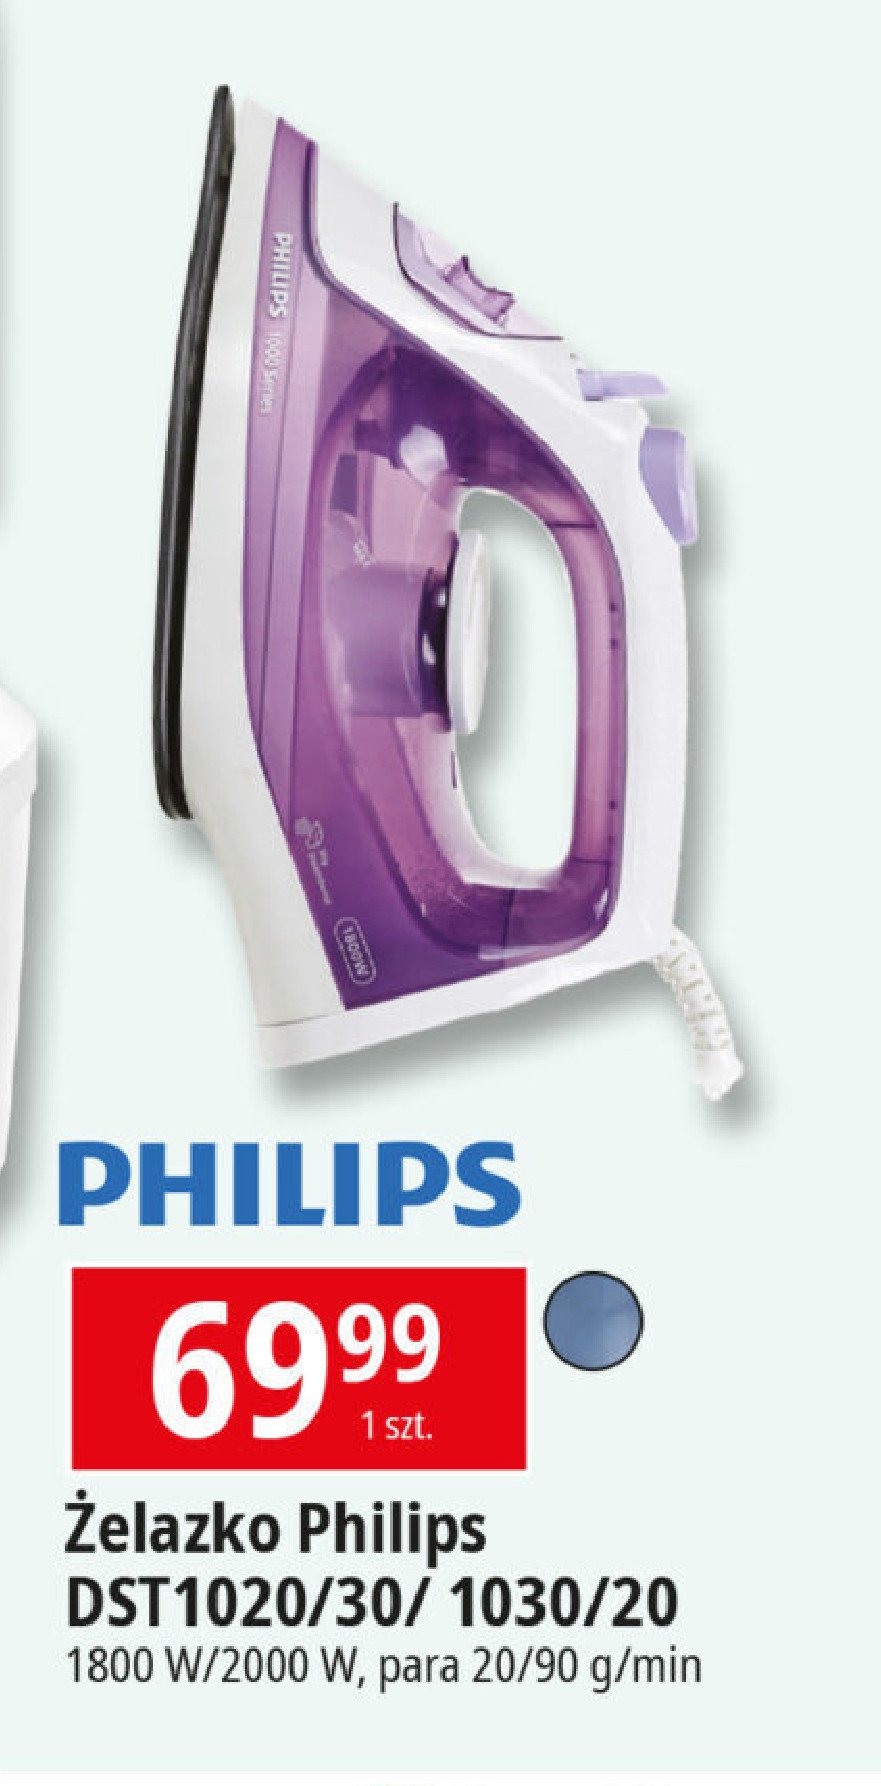 Żelazko parowe dst1030/20 Philips promocja